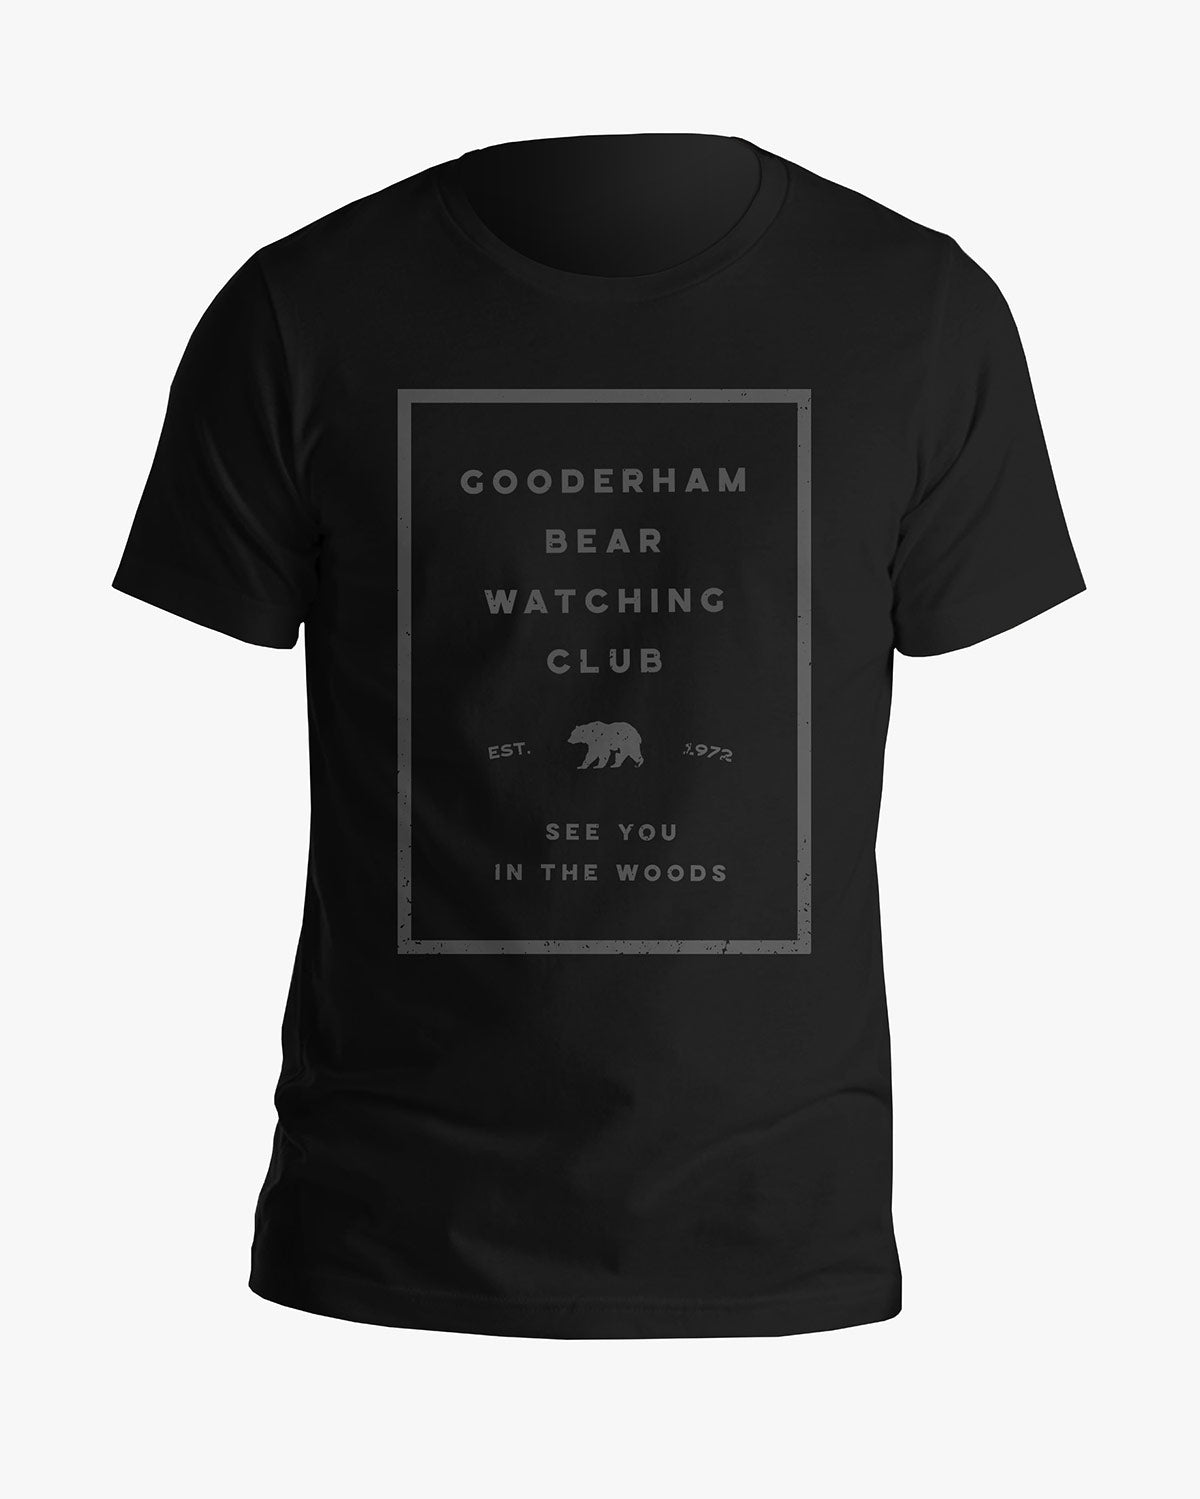 Bear Watching Club - Gooderham - Tee